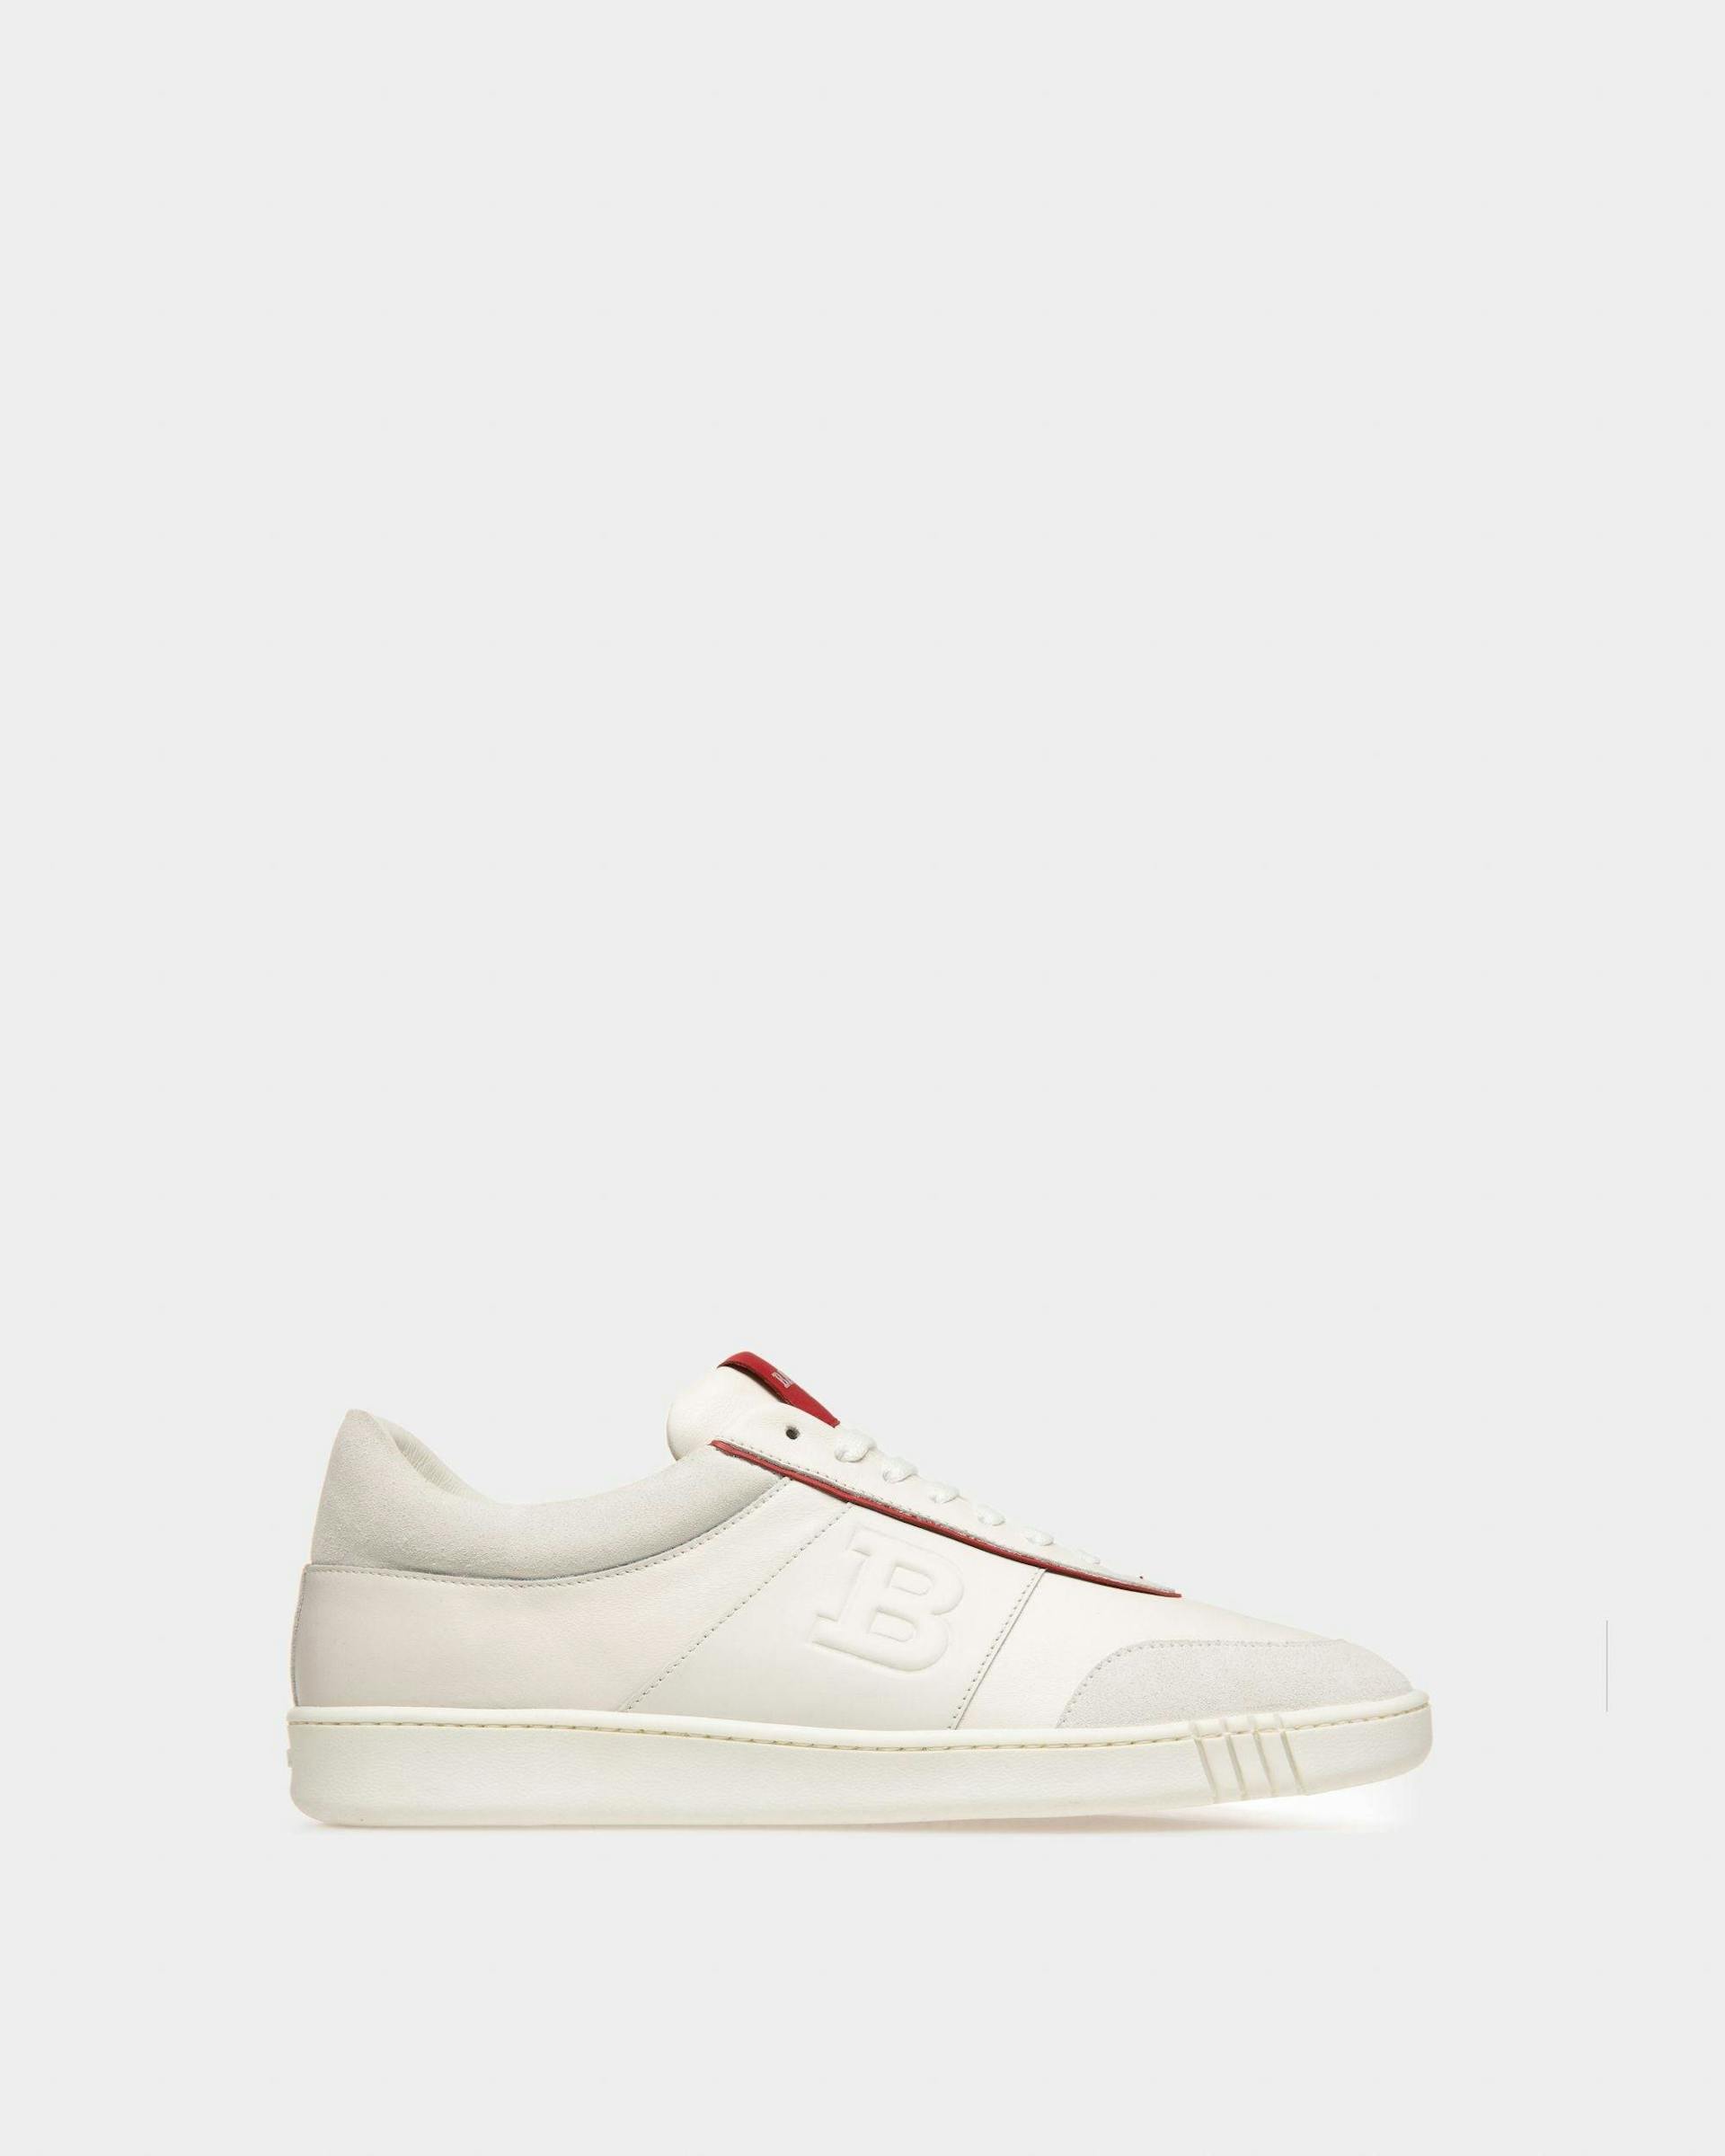 Wallys Sneakers In Pelle E Camoscio Bianco E Rosso - Uomo - Bally - 01